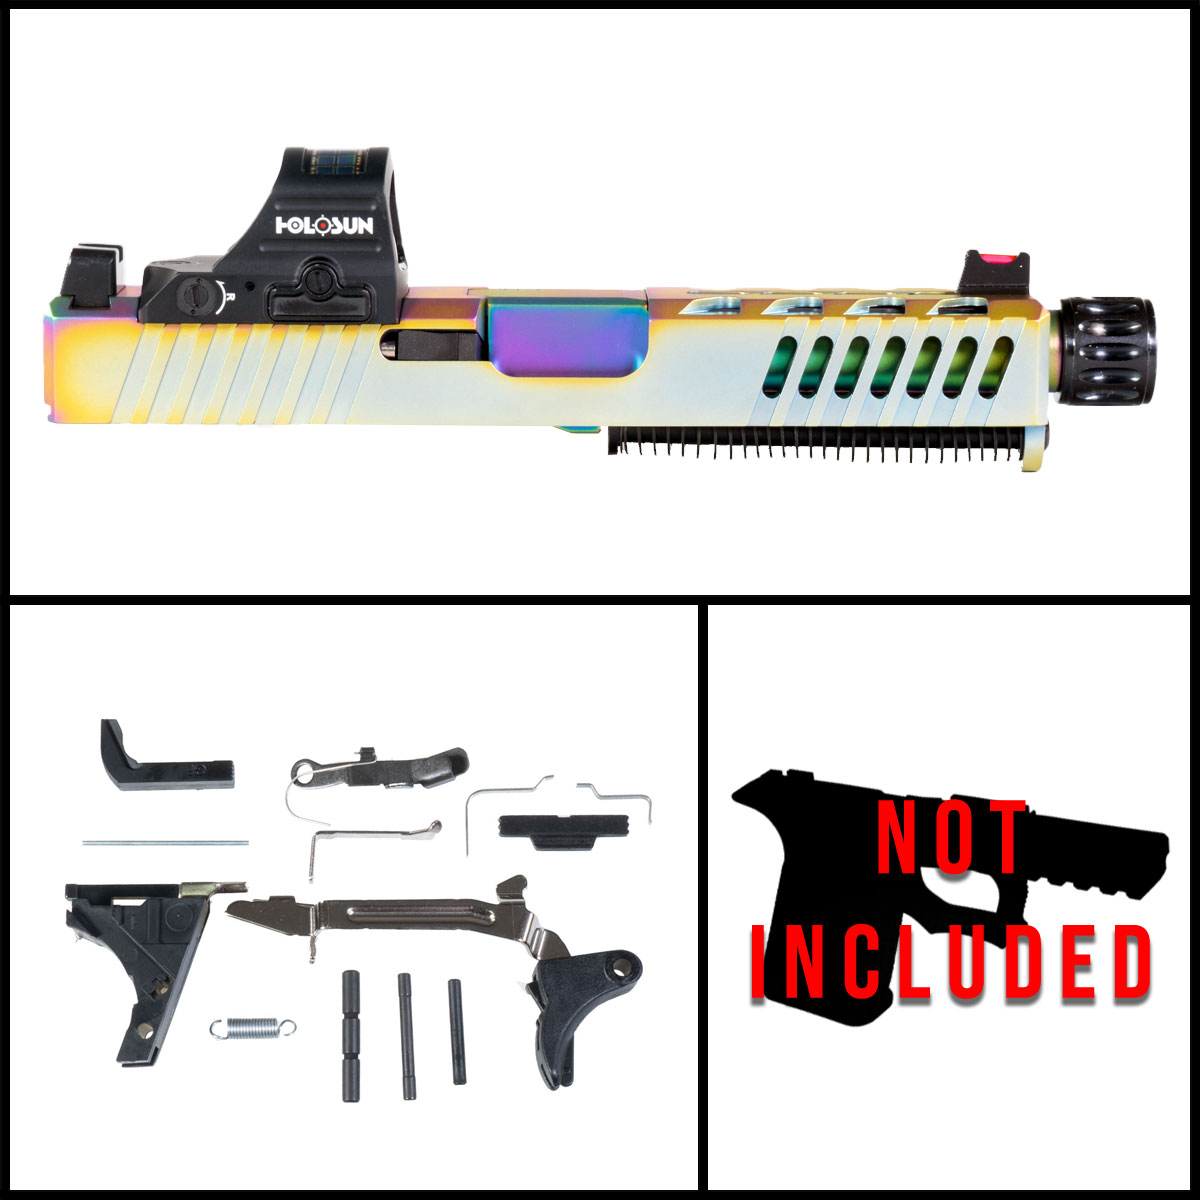 MMC 'Spectrum w/ HS507C-X2' 9mm Full Pistol Build Kits (Everything Minus Frame) - Glock 19 Gen 1-2 Compatible